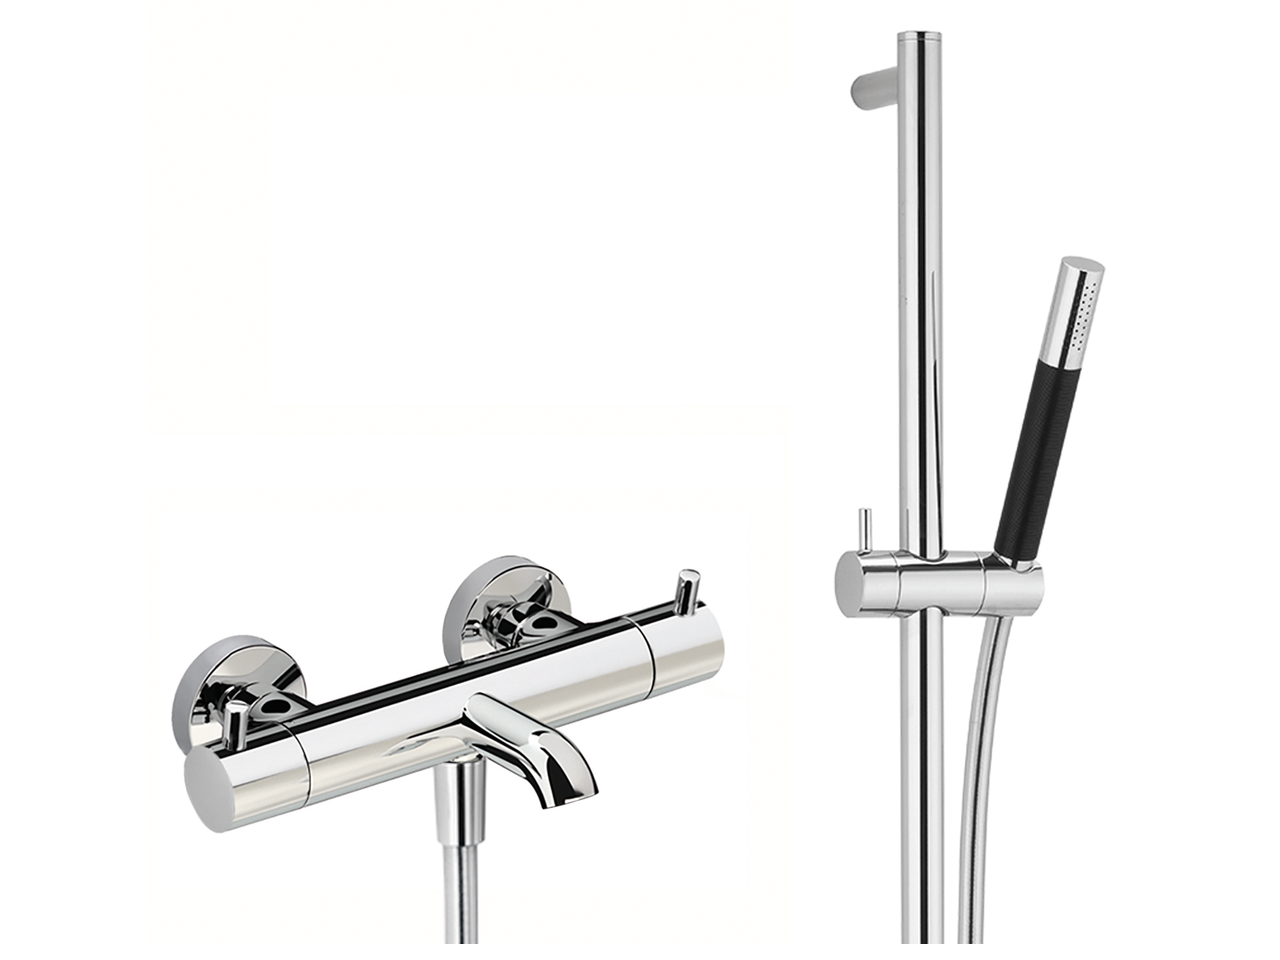 CisalThermostatic bath-shower mixer with sliding bar NUOVA LESS_LNS23016